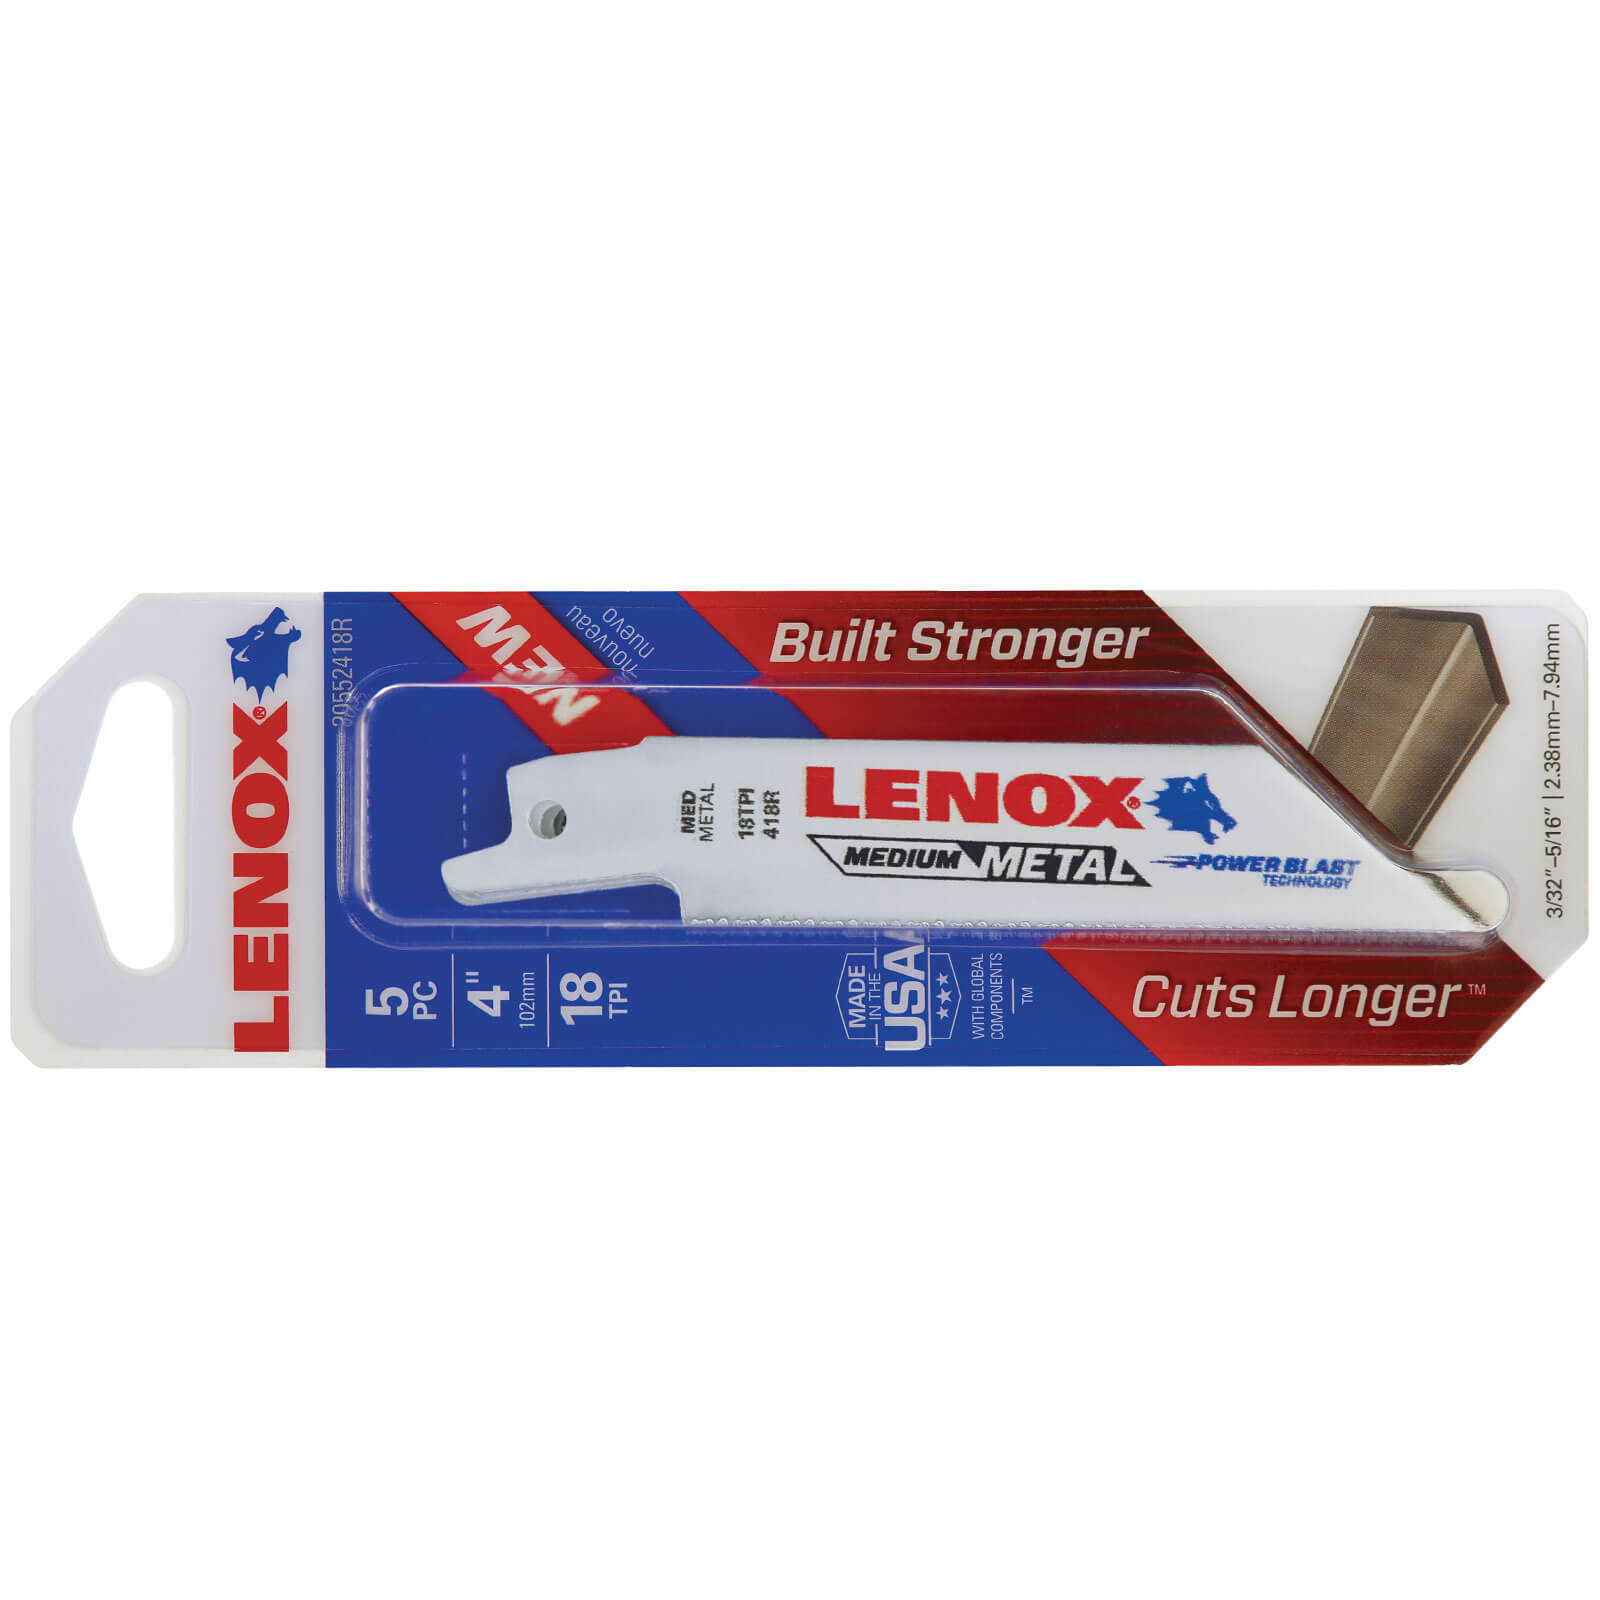 Image of Lenox 18TPI Medium Metal Cutting Reciprocating Sabre Saw Blades 102mm Pack of 5